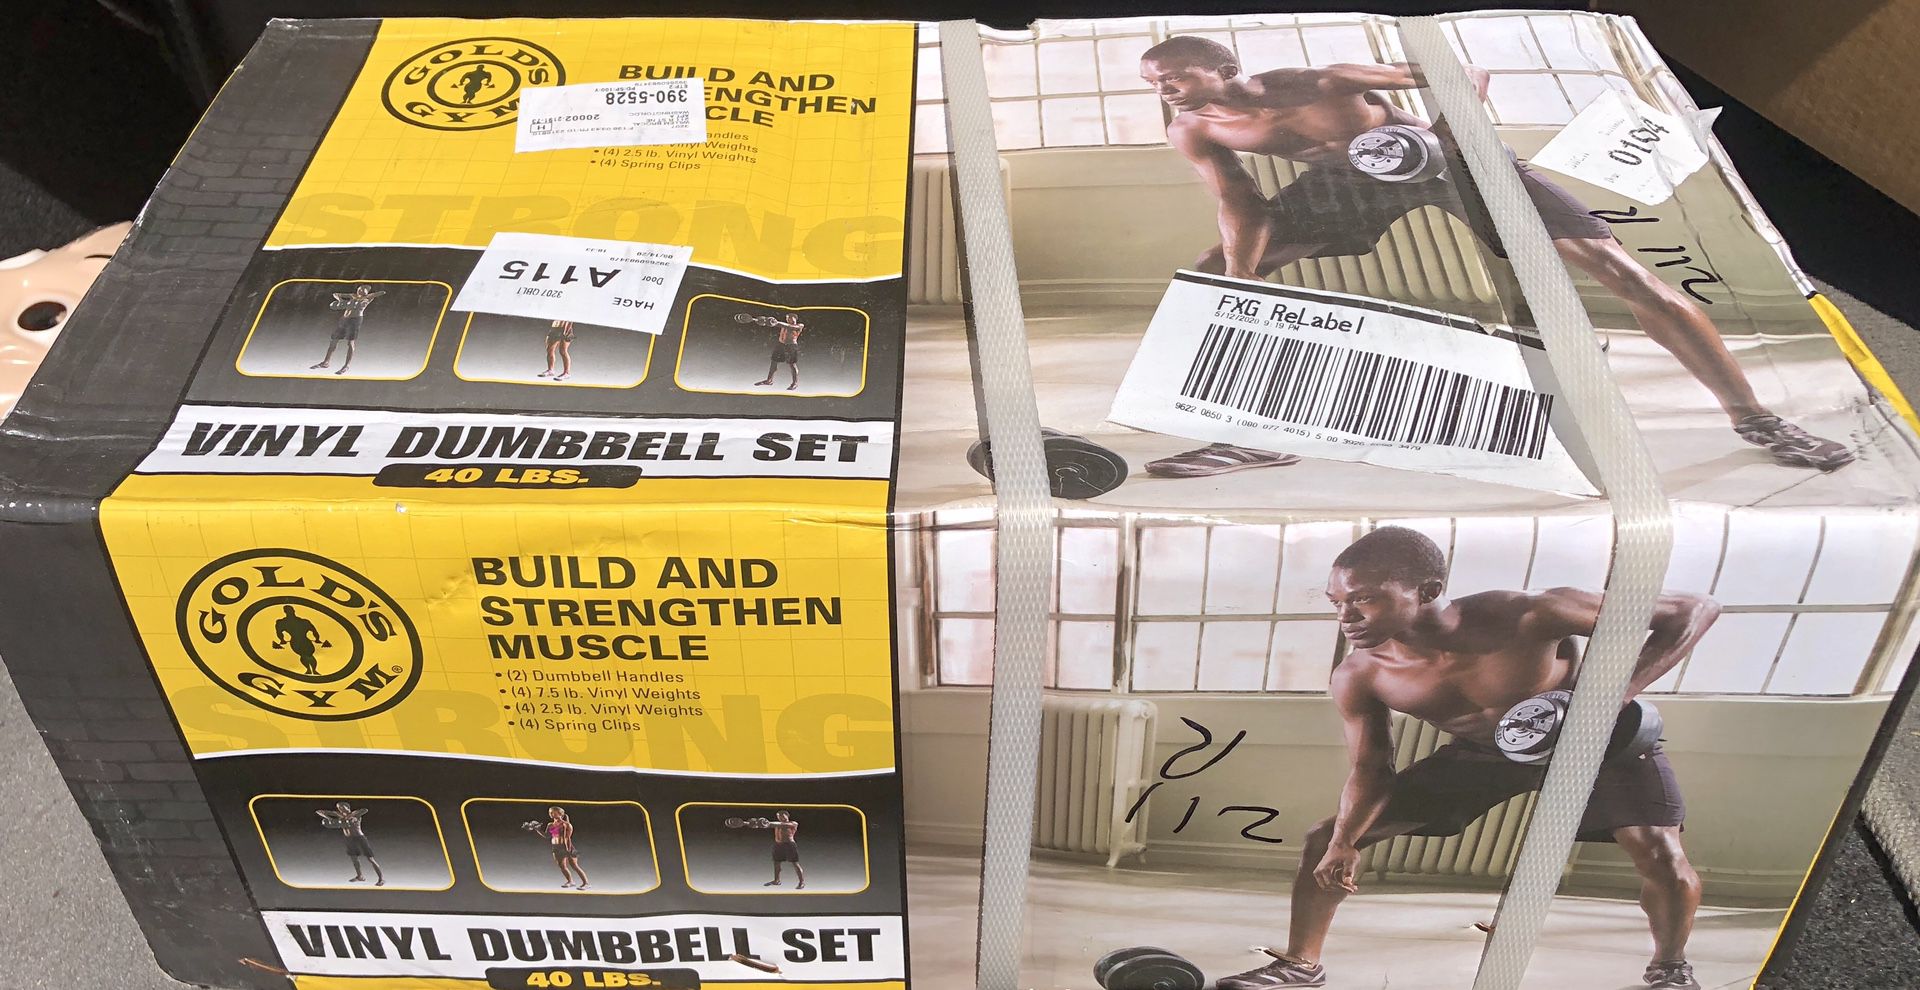 Brand new gold’s gym adjustable vinyl dumbbell set 40 lbs